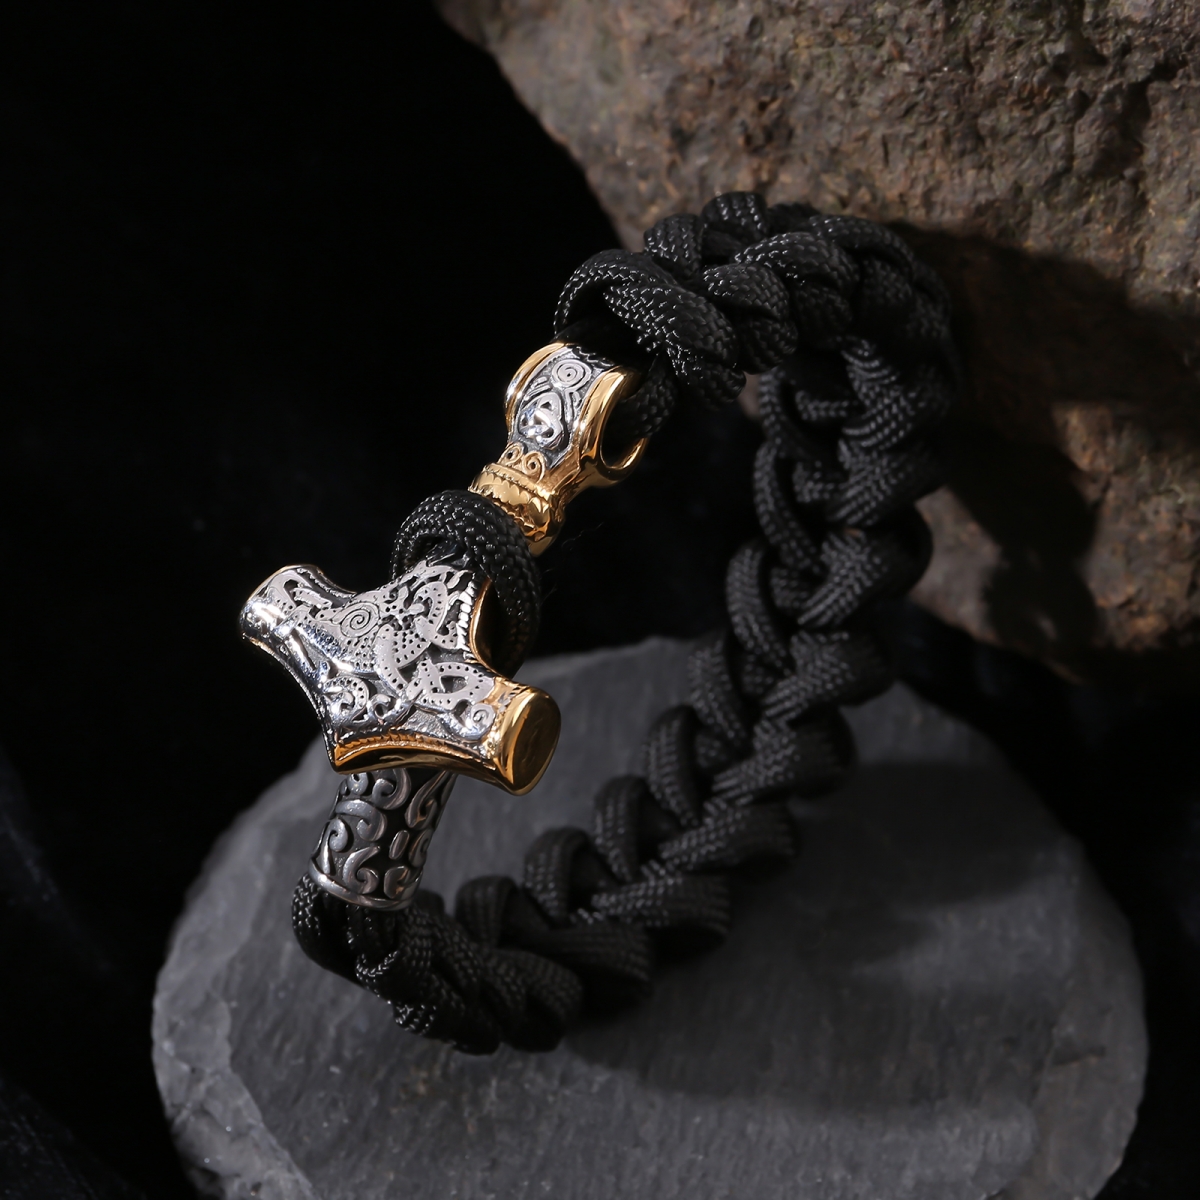 Mjolnir Bracelet US$3.5/PC-NORSECOLLECTION- Viking Jewelry,Viking Necklace,Viking Bracelet,Viking Rings,Viking Mugs,Viking Accessories,Viking Crafts